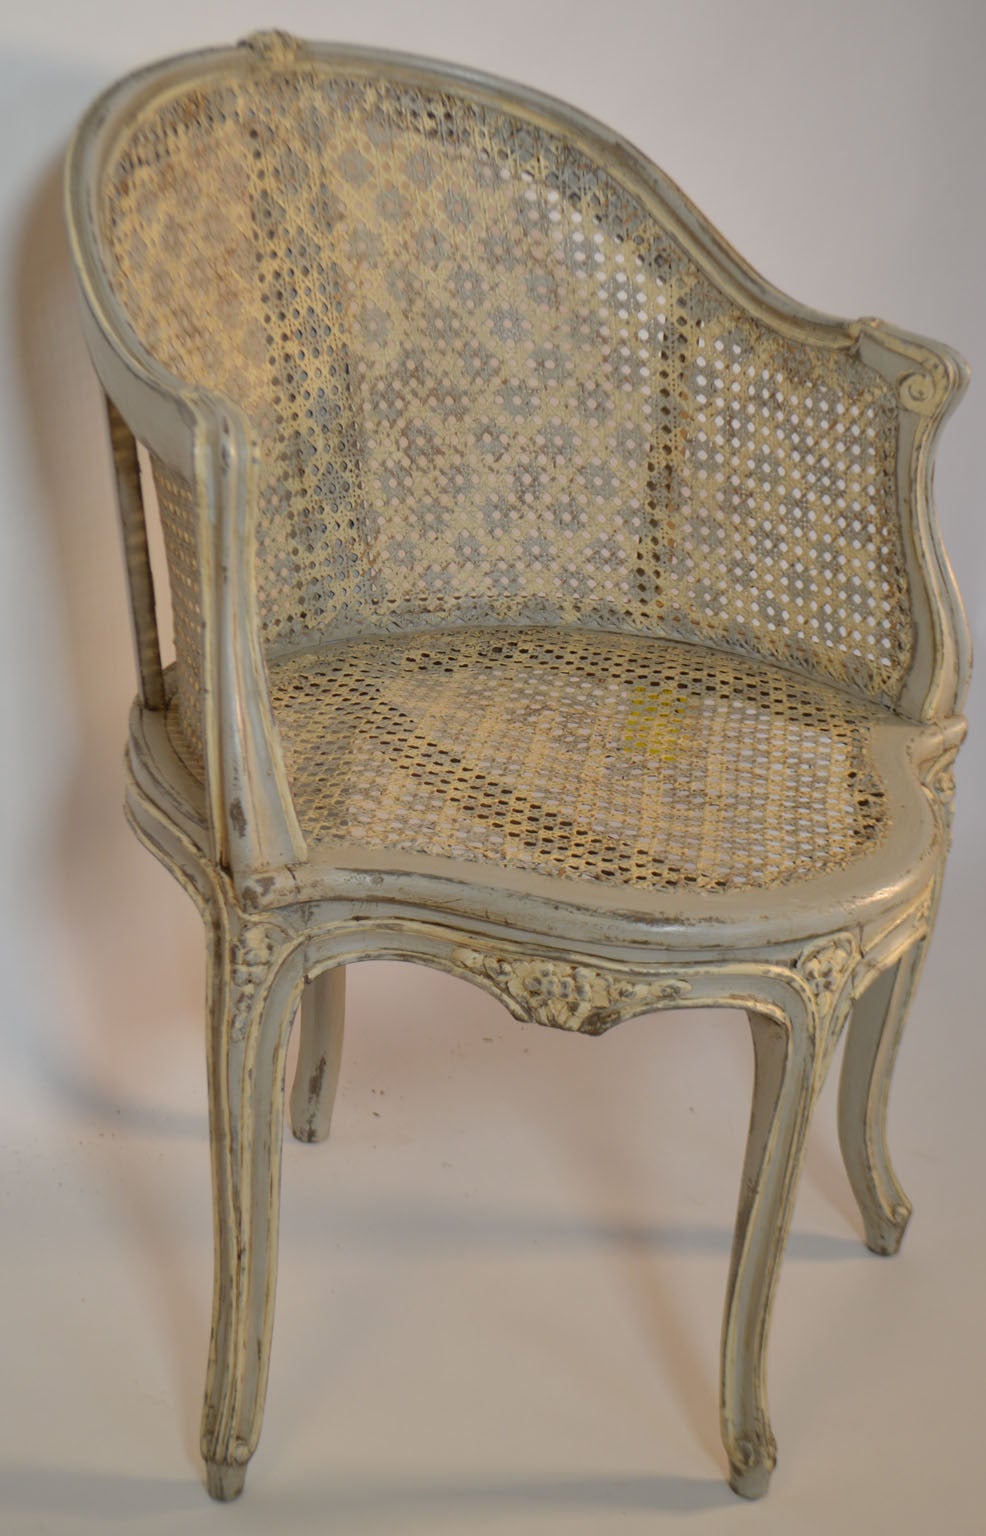 Louis XV style desk chair, also known as a Fauteuil de cabinet.